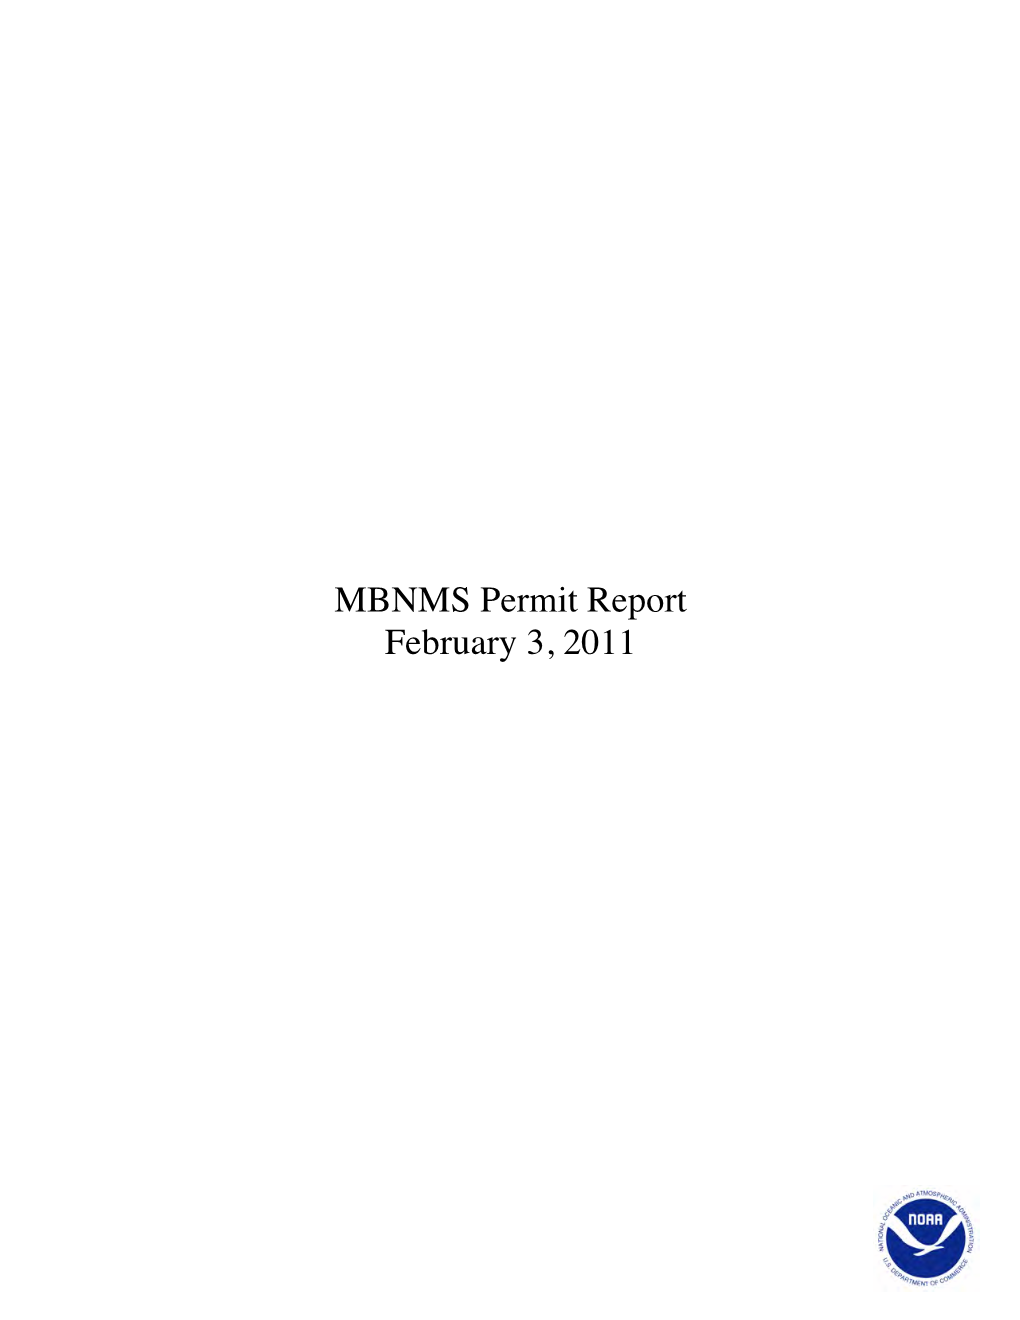 MBNMS Permit Activity Report 2/3/11